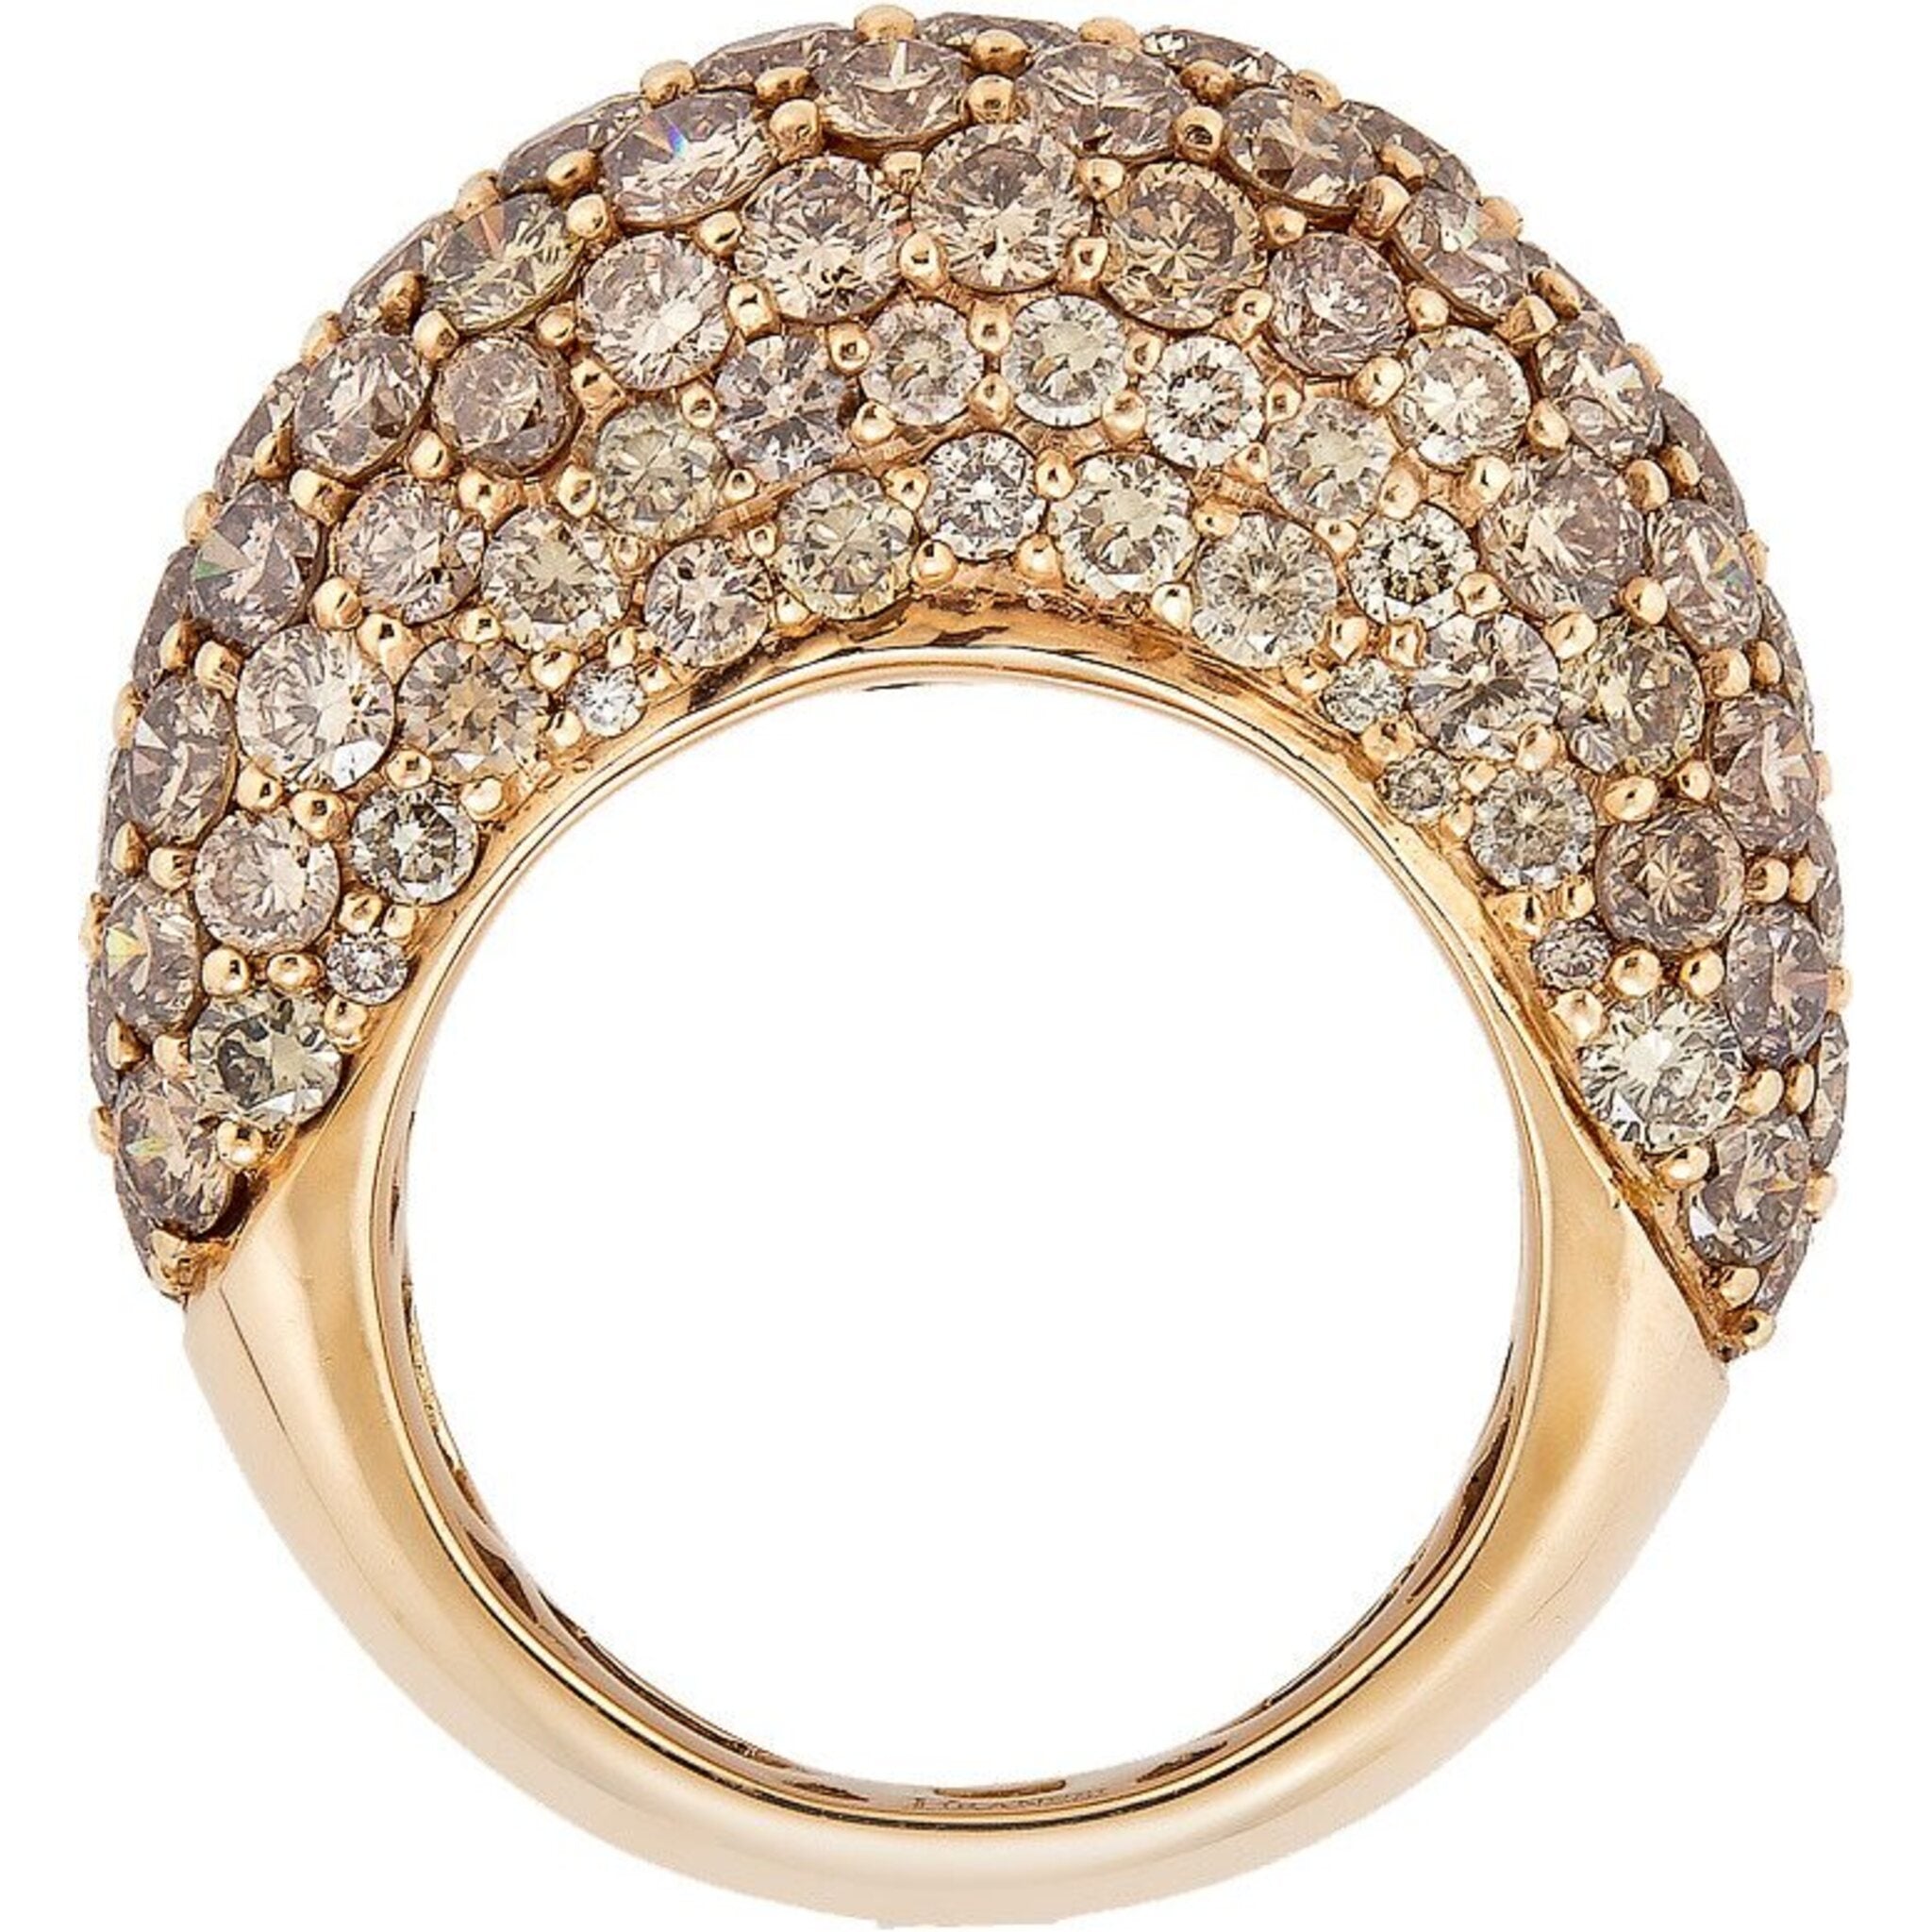 Piranesi - Dome Ring in Champagne Diamond - 18K Rose Gold